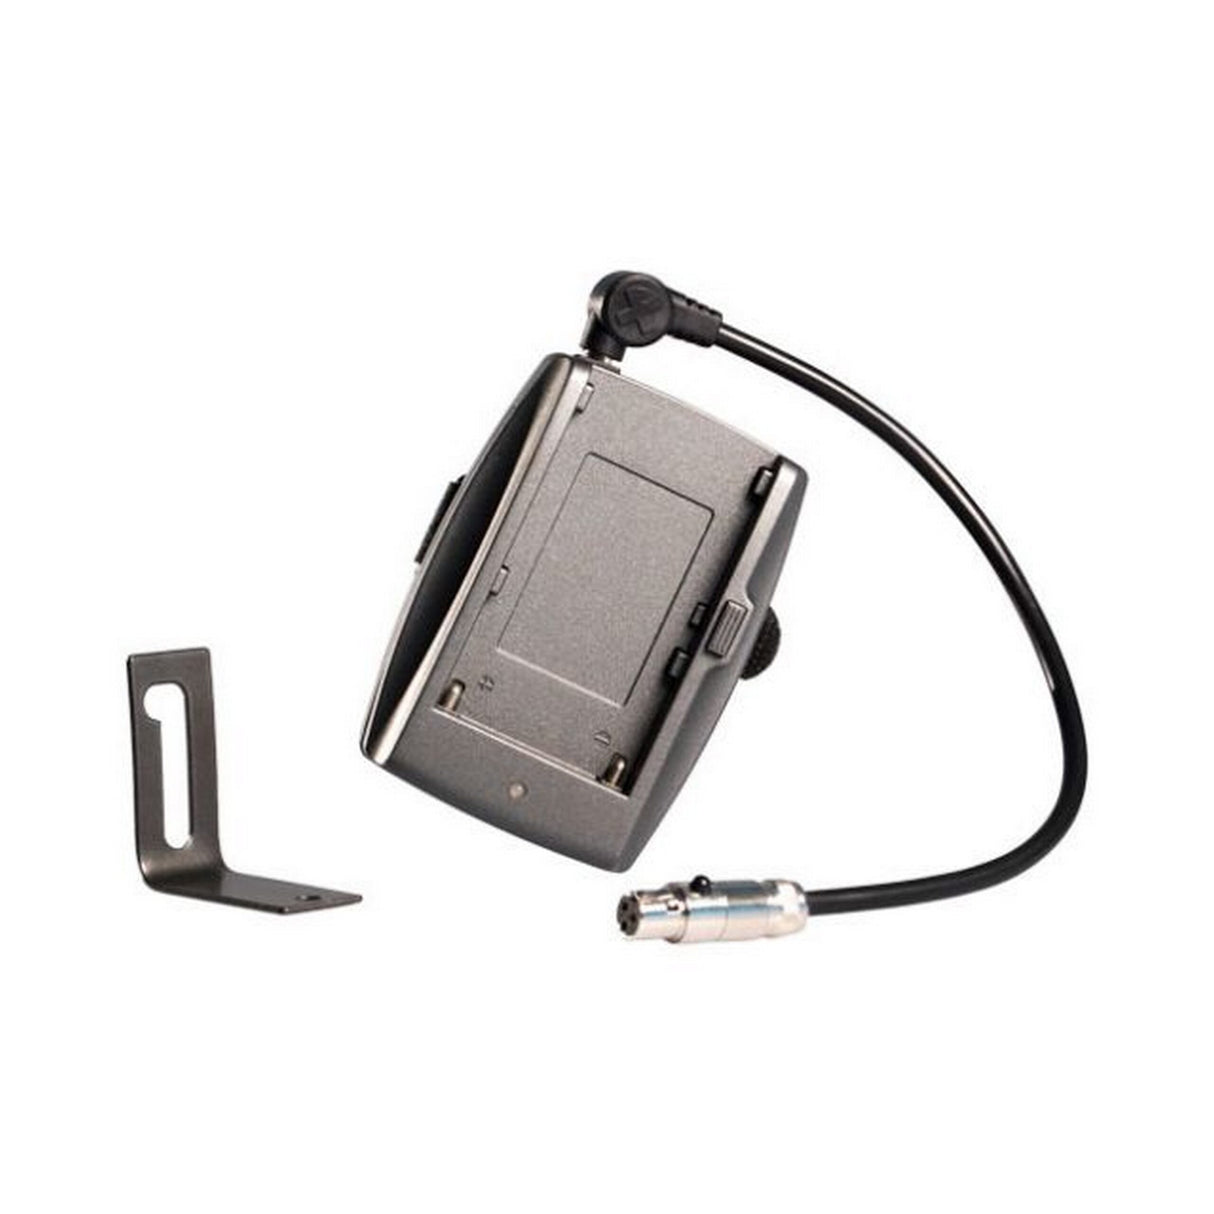 Blind Spot Gear Scorpion v2 Battery Adapter, 1302-006-02